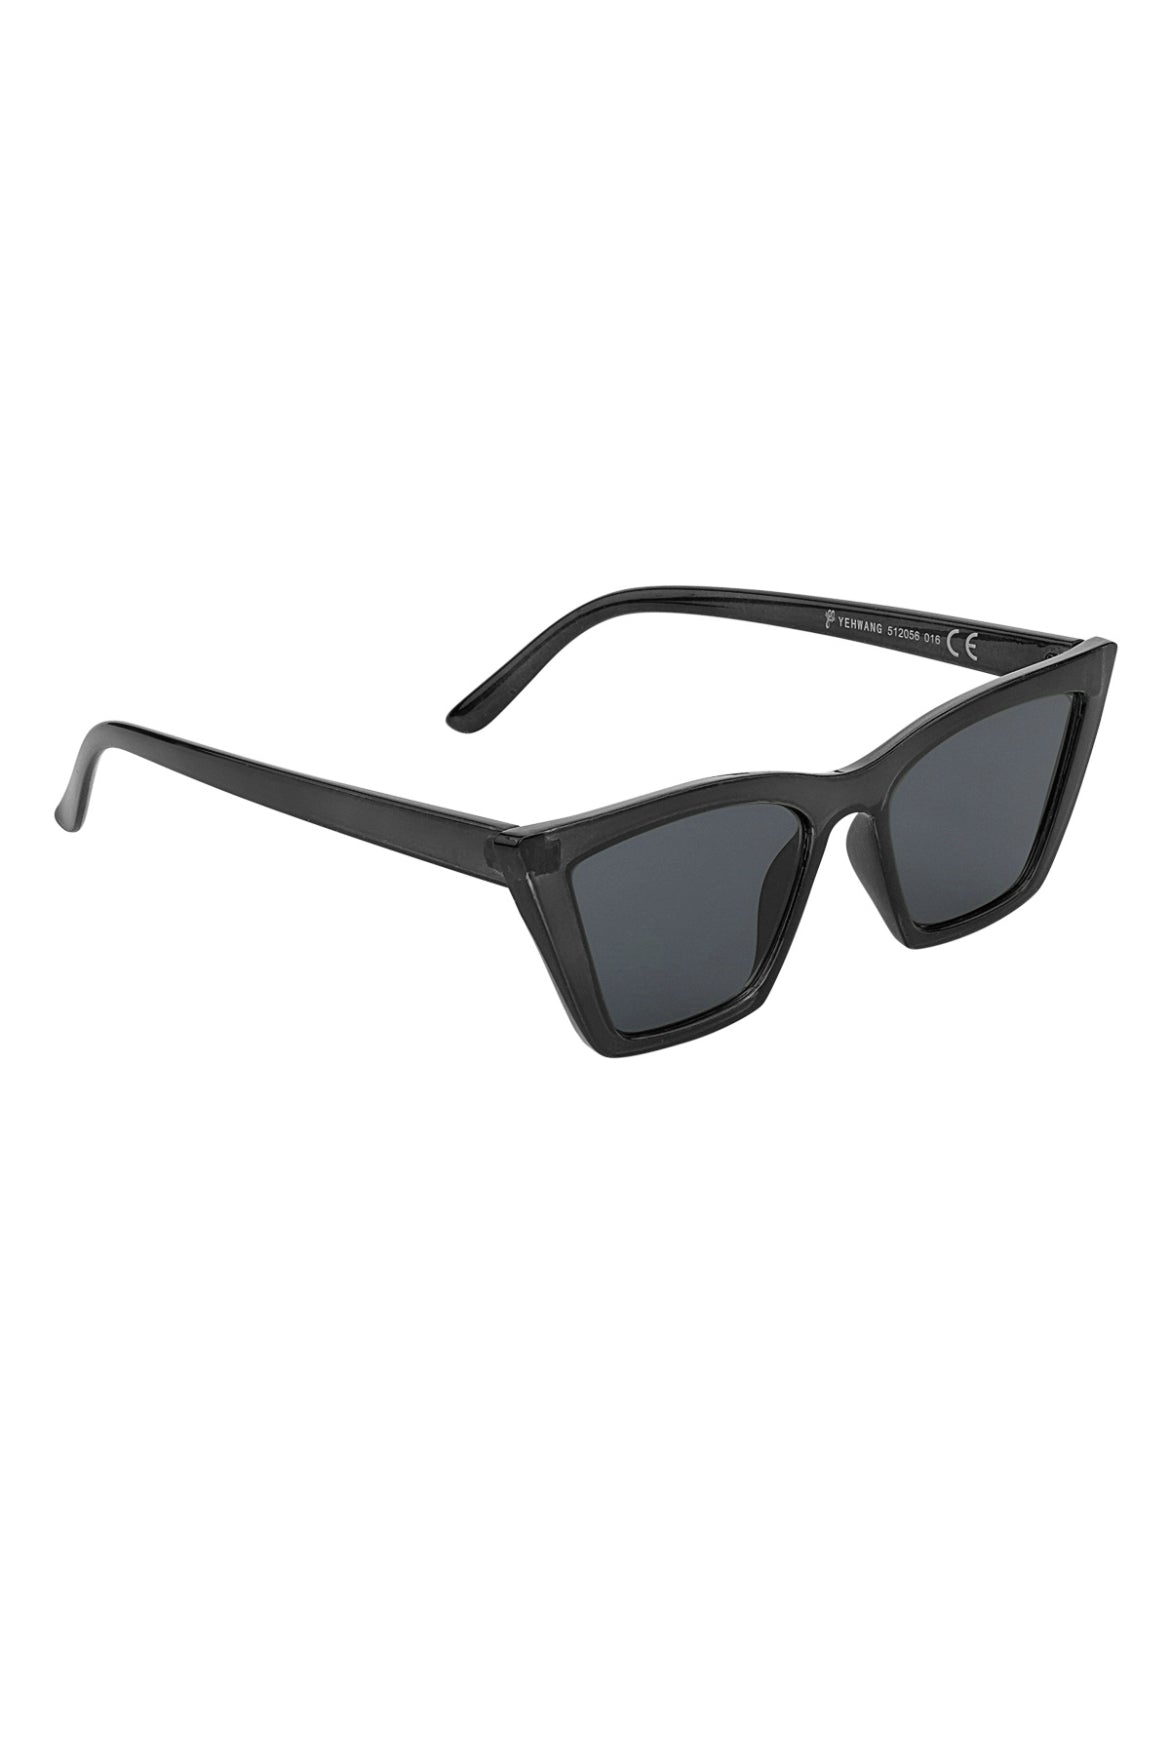 Cat eye black sunglasses -